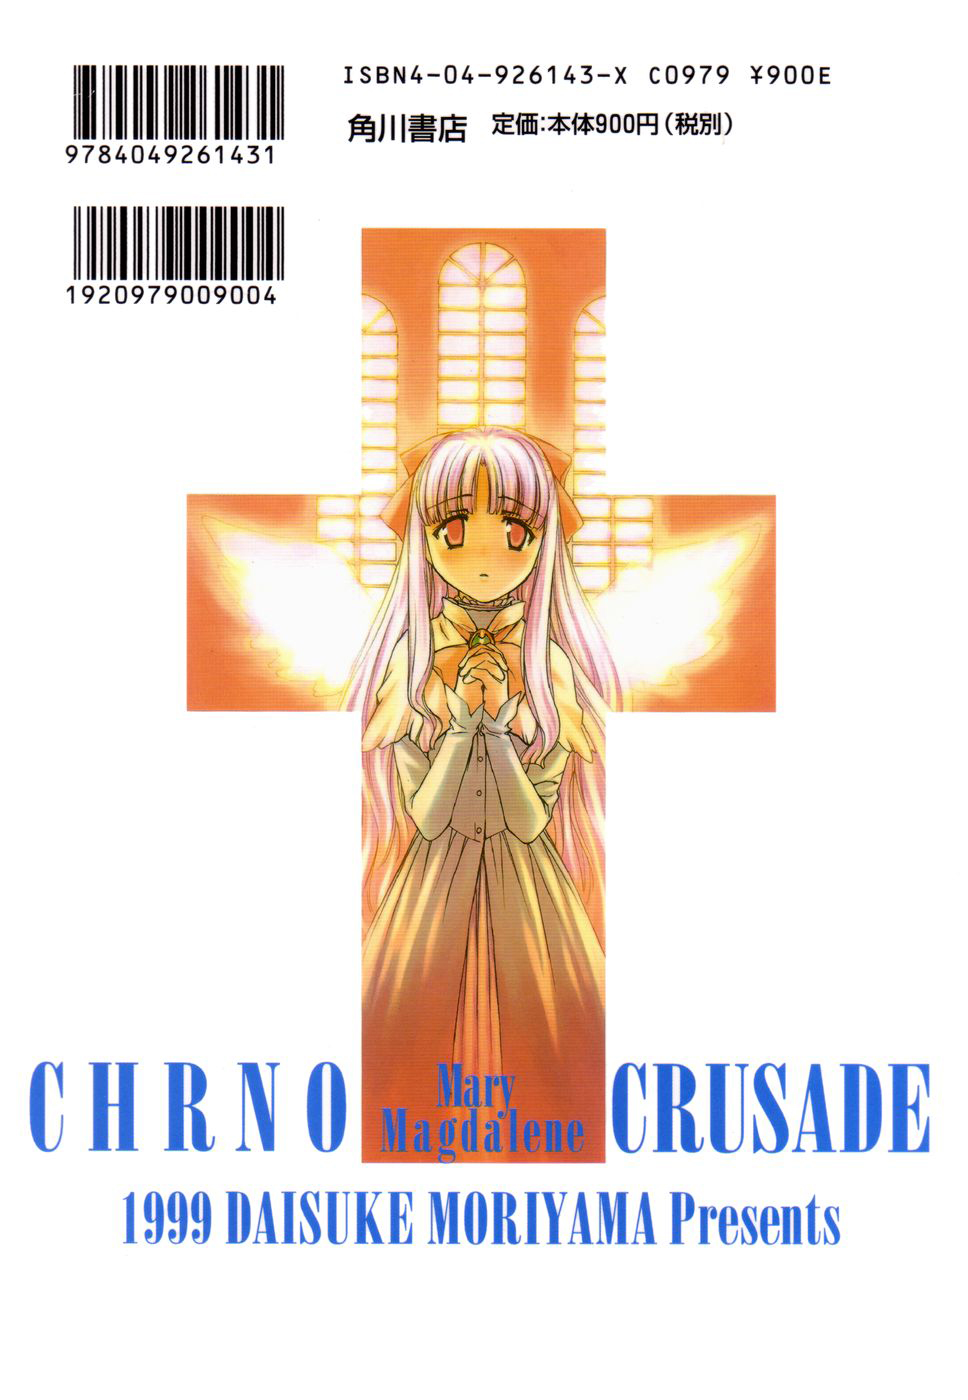 [Manga] Chrono Crusade (Đọc online tại SSF) CHRNO-CRUSADE-01-000-b